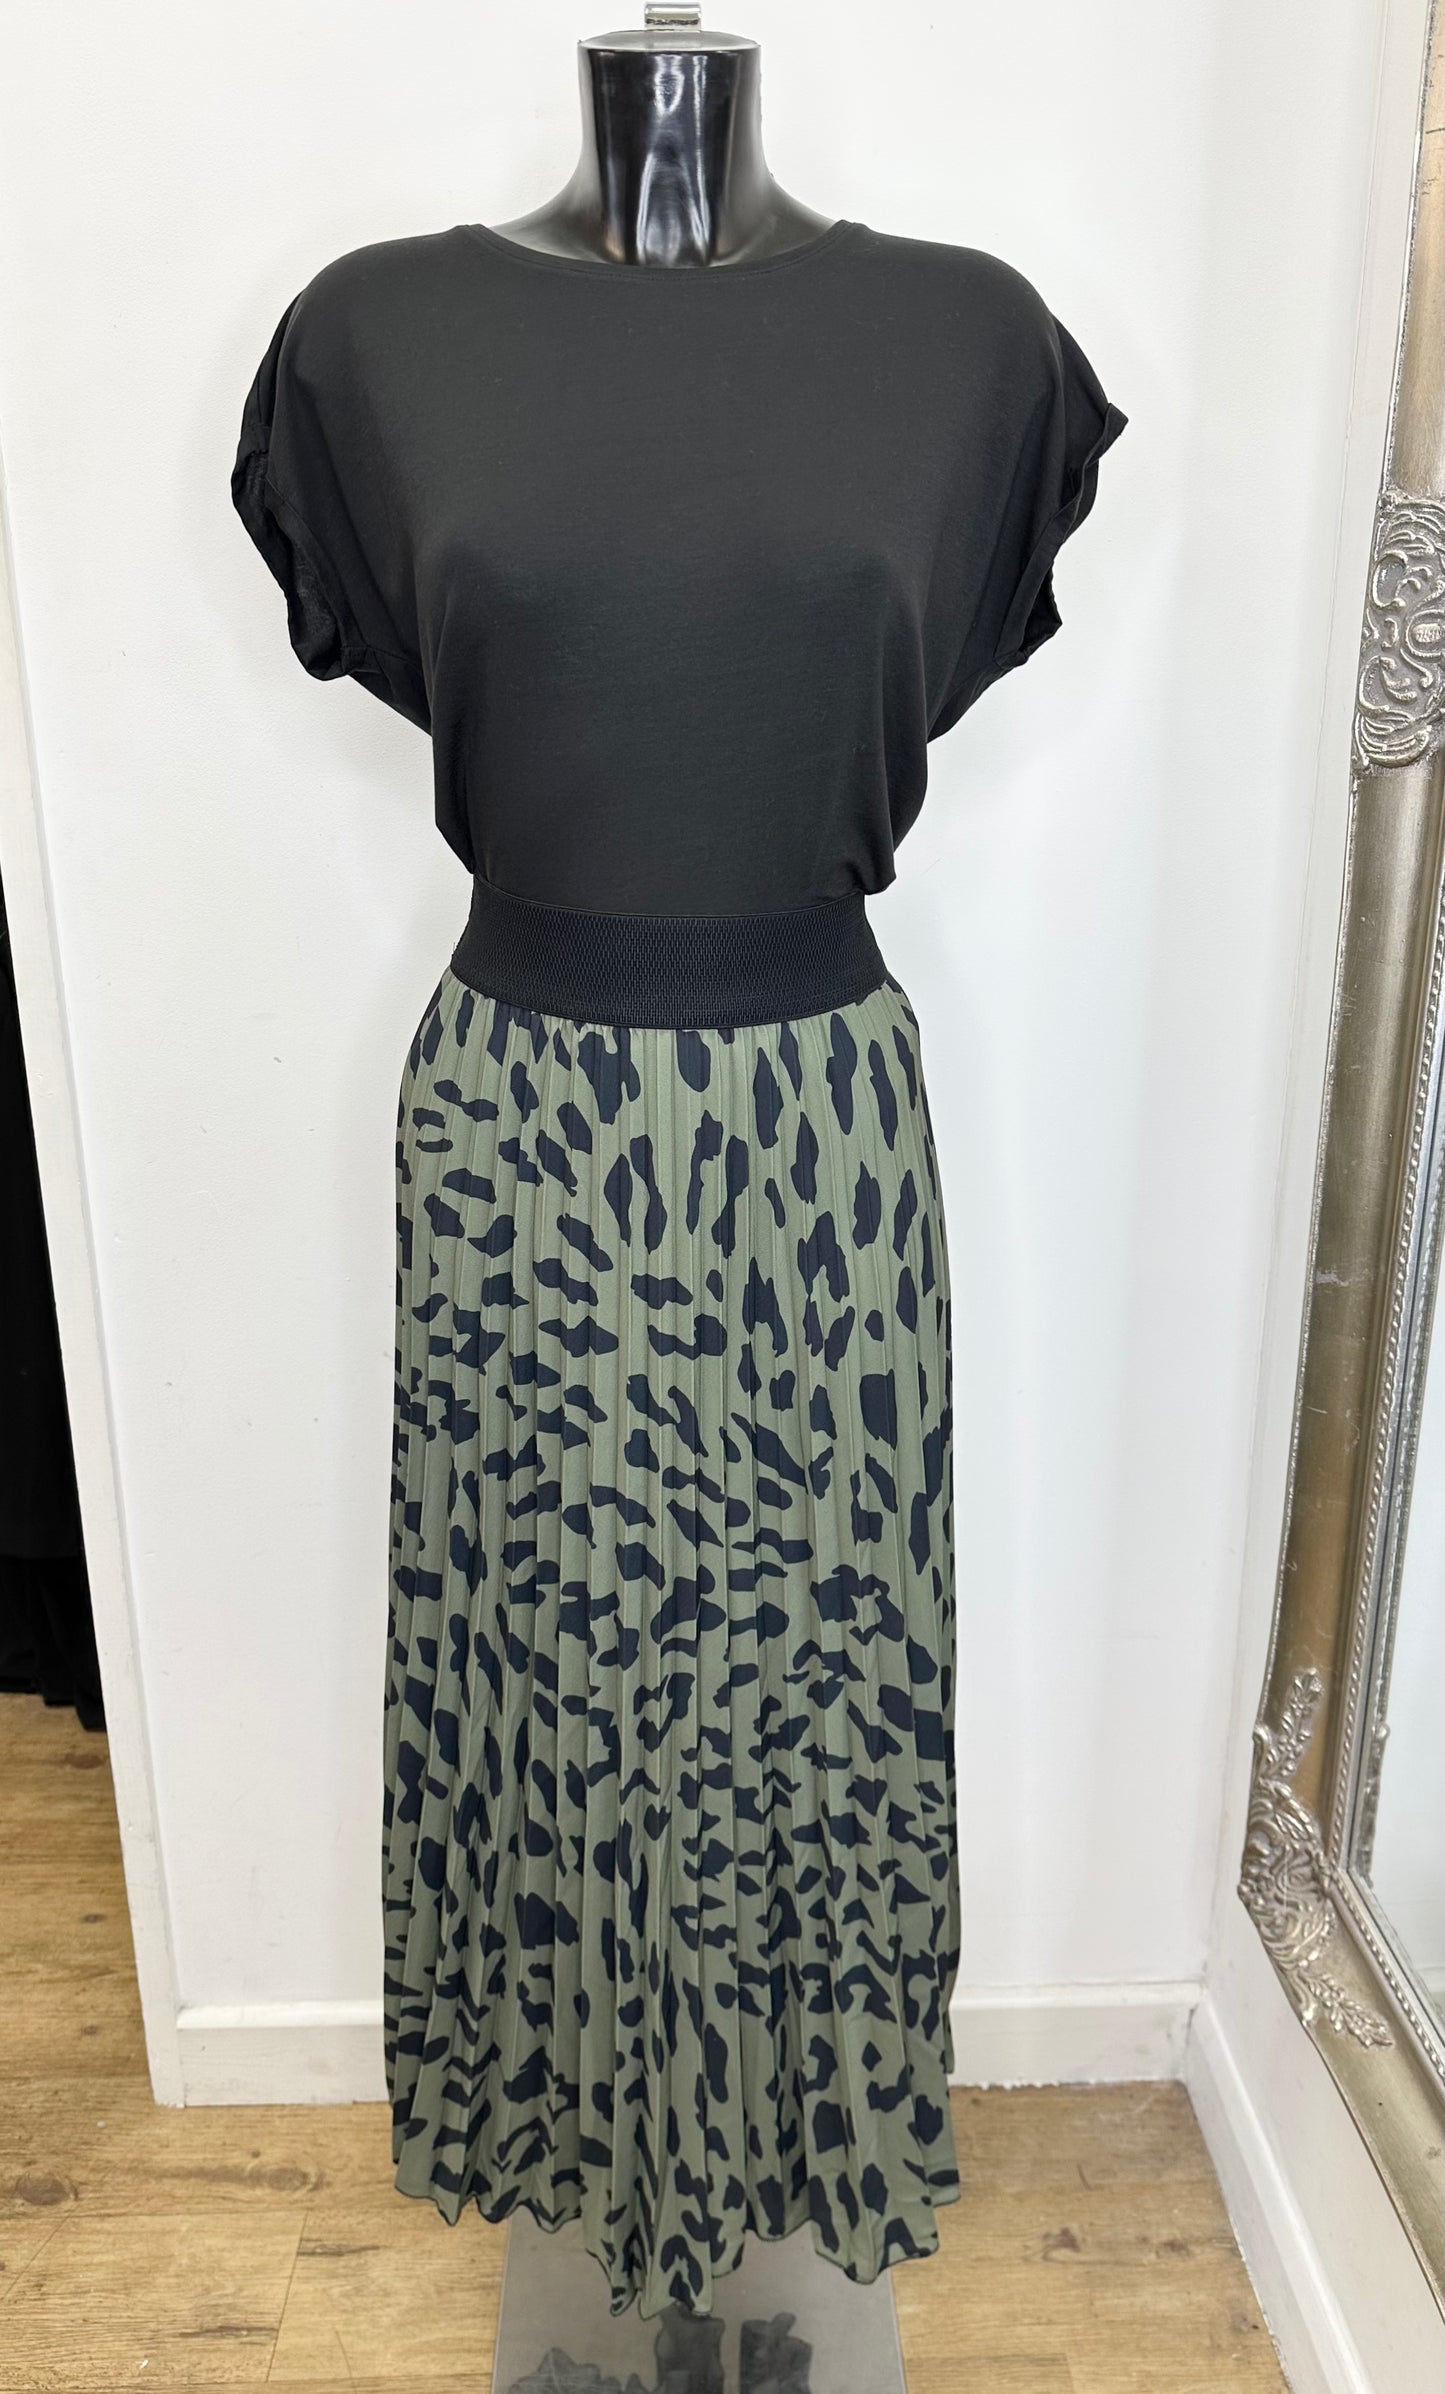 Animal print pleated skirt - Khaki colour